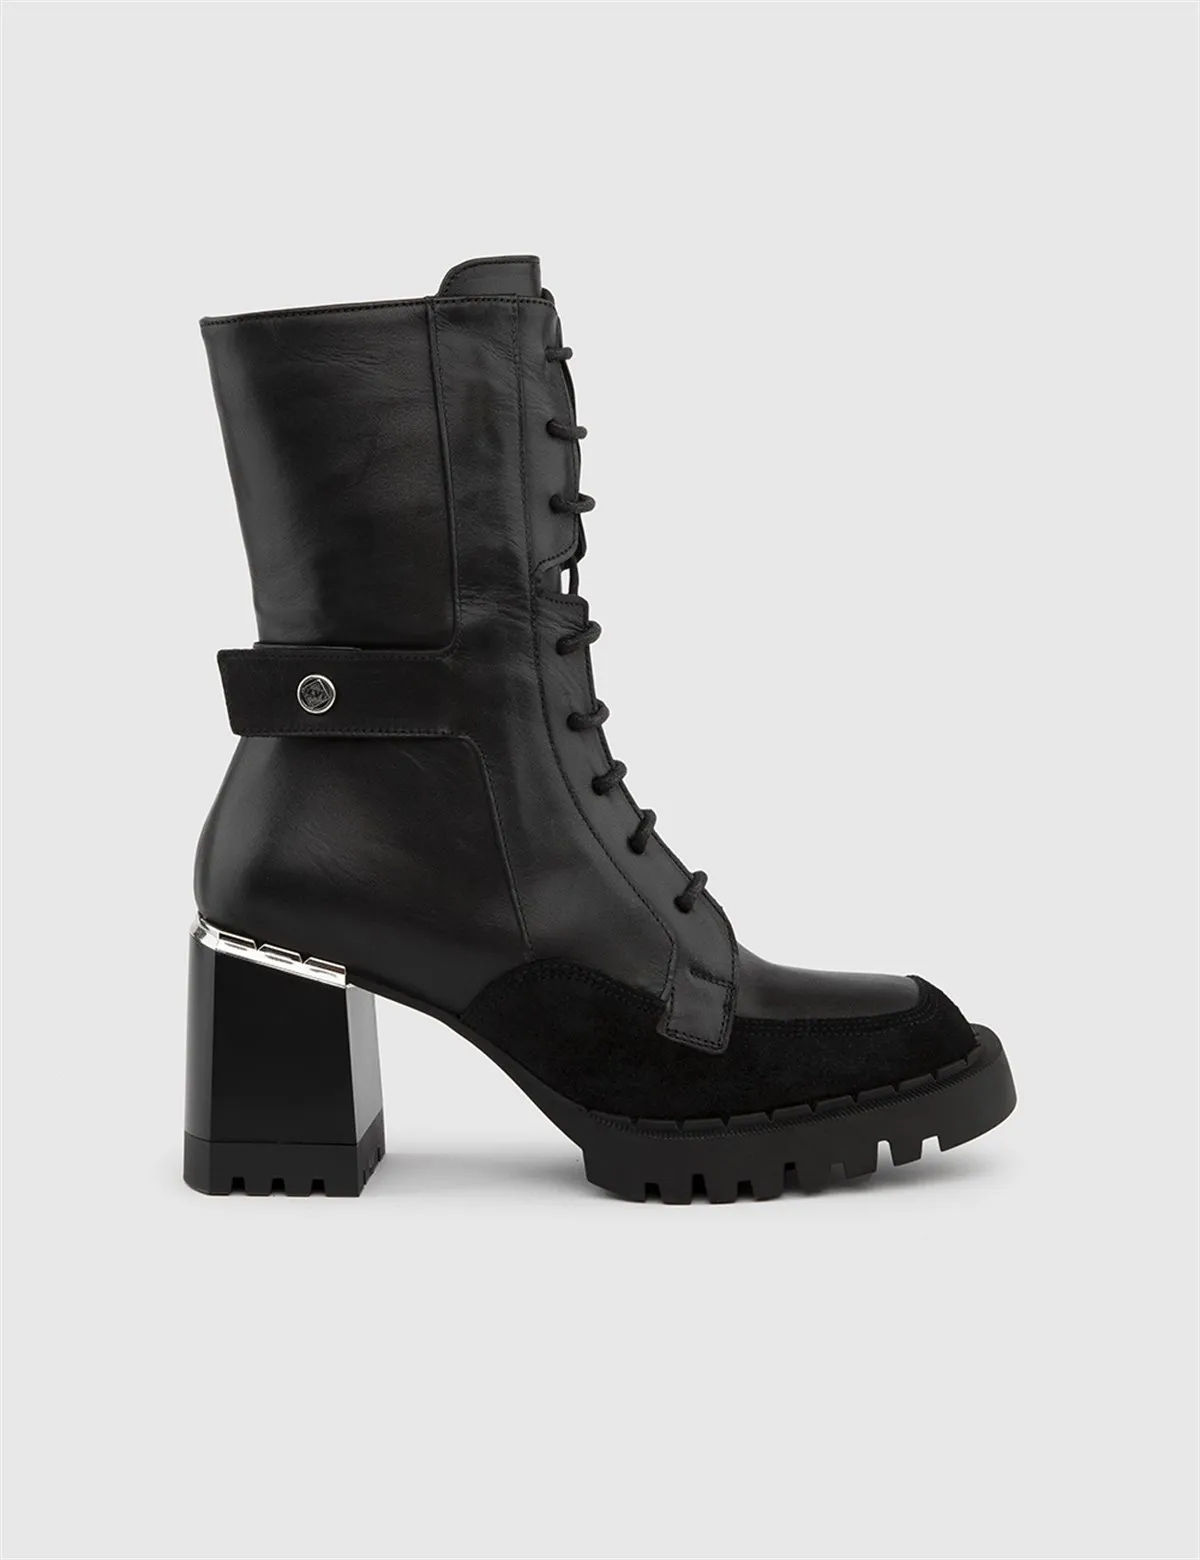 

ILVi-Genuine Leather Handmade Danik Black Suede Heeled Boot Women's Shoes 2022 Fall/Winter